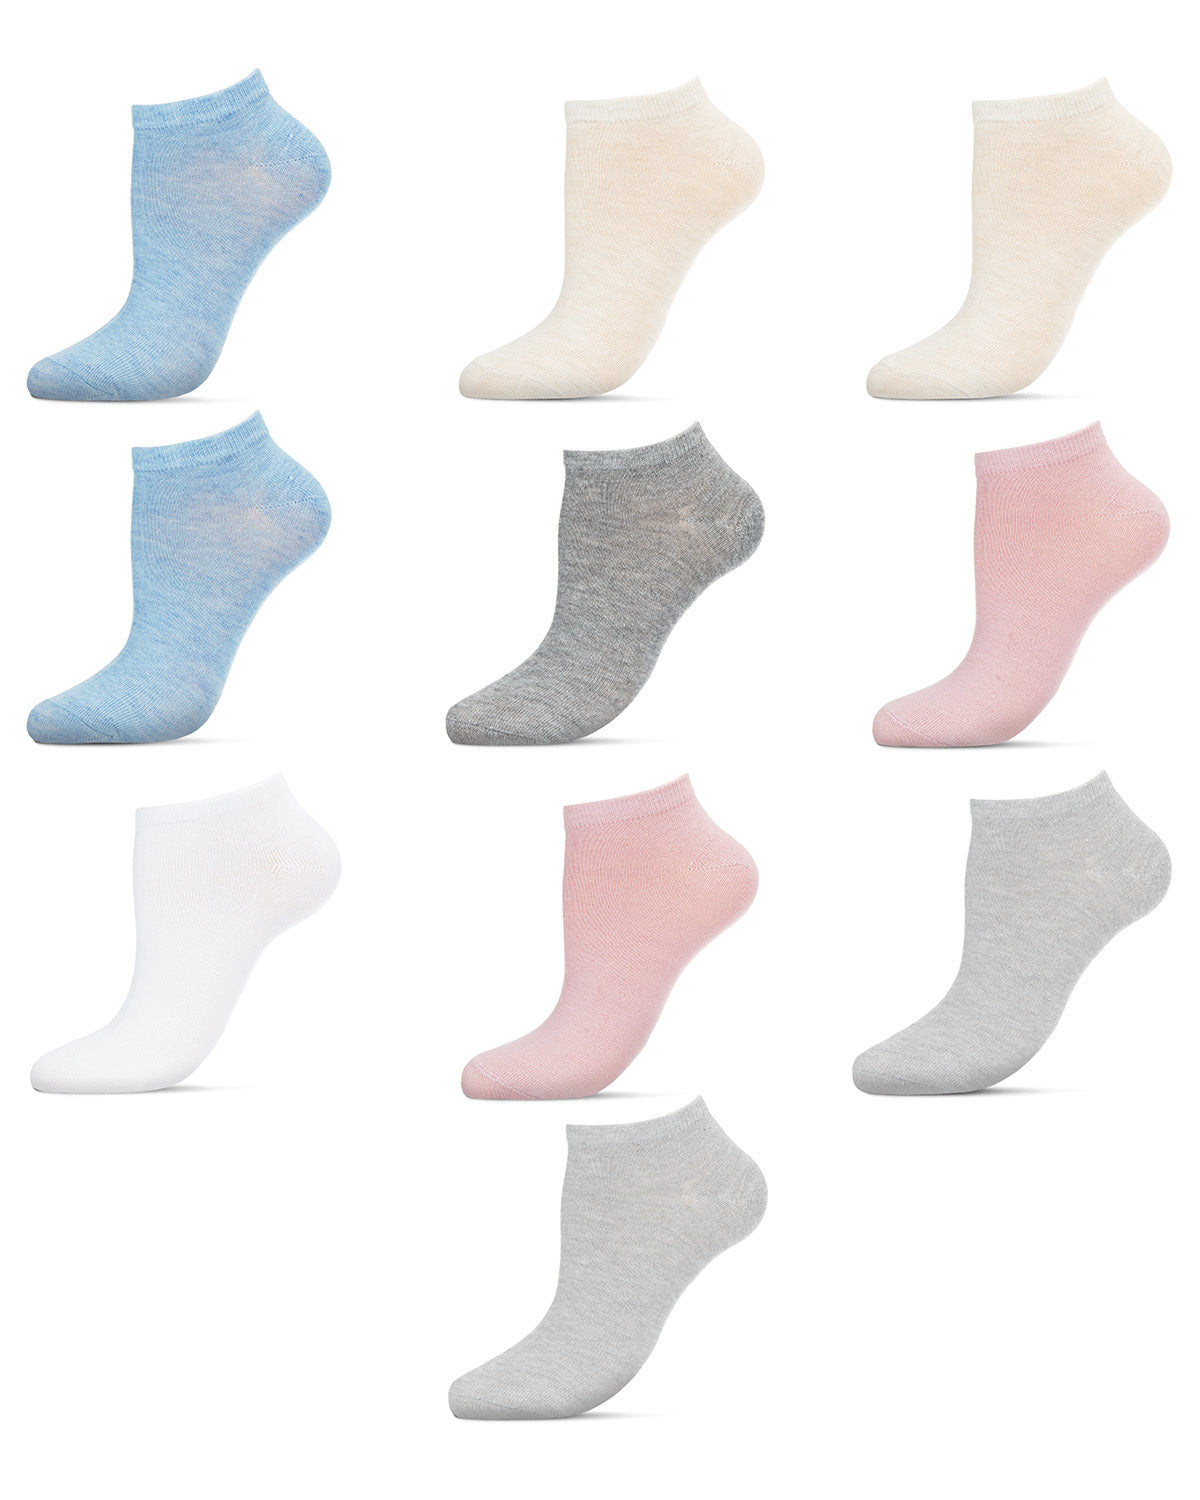 Trendy Cotton Socks For Man and Women Ankle lenth socks low cut socks  loafers socks for boys and girls moje moja mojam jurabs saks caks Chhote  size